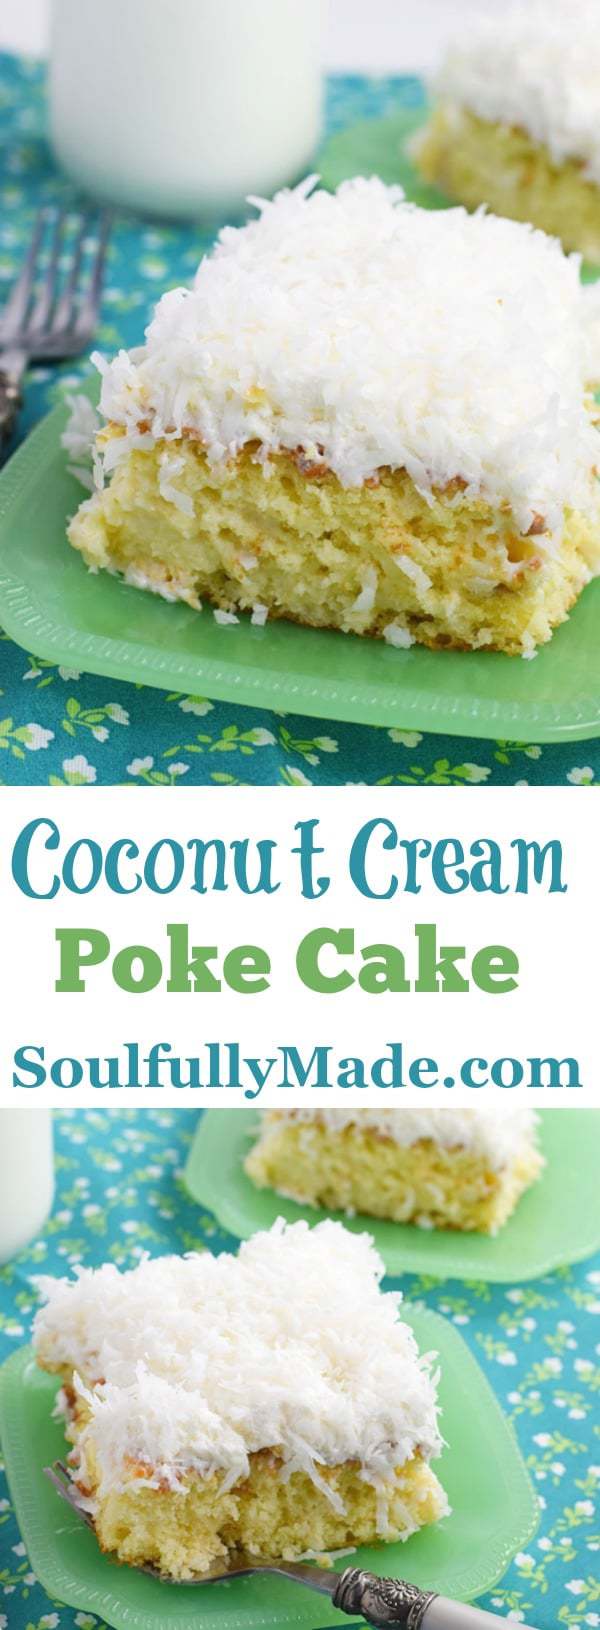 Pin Collage of Coconut Cream Poke Cake